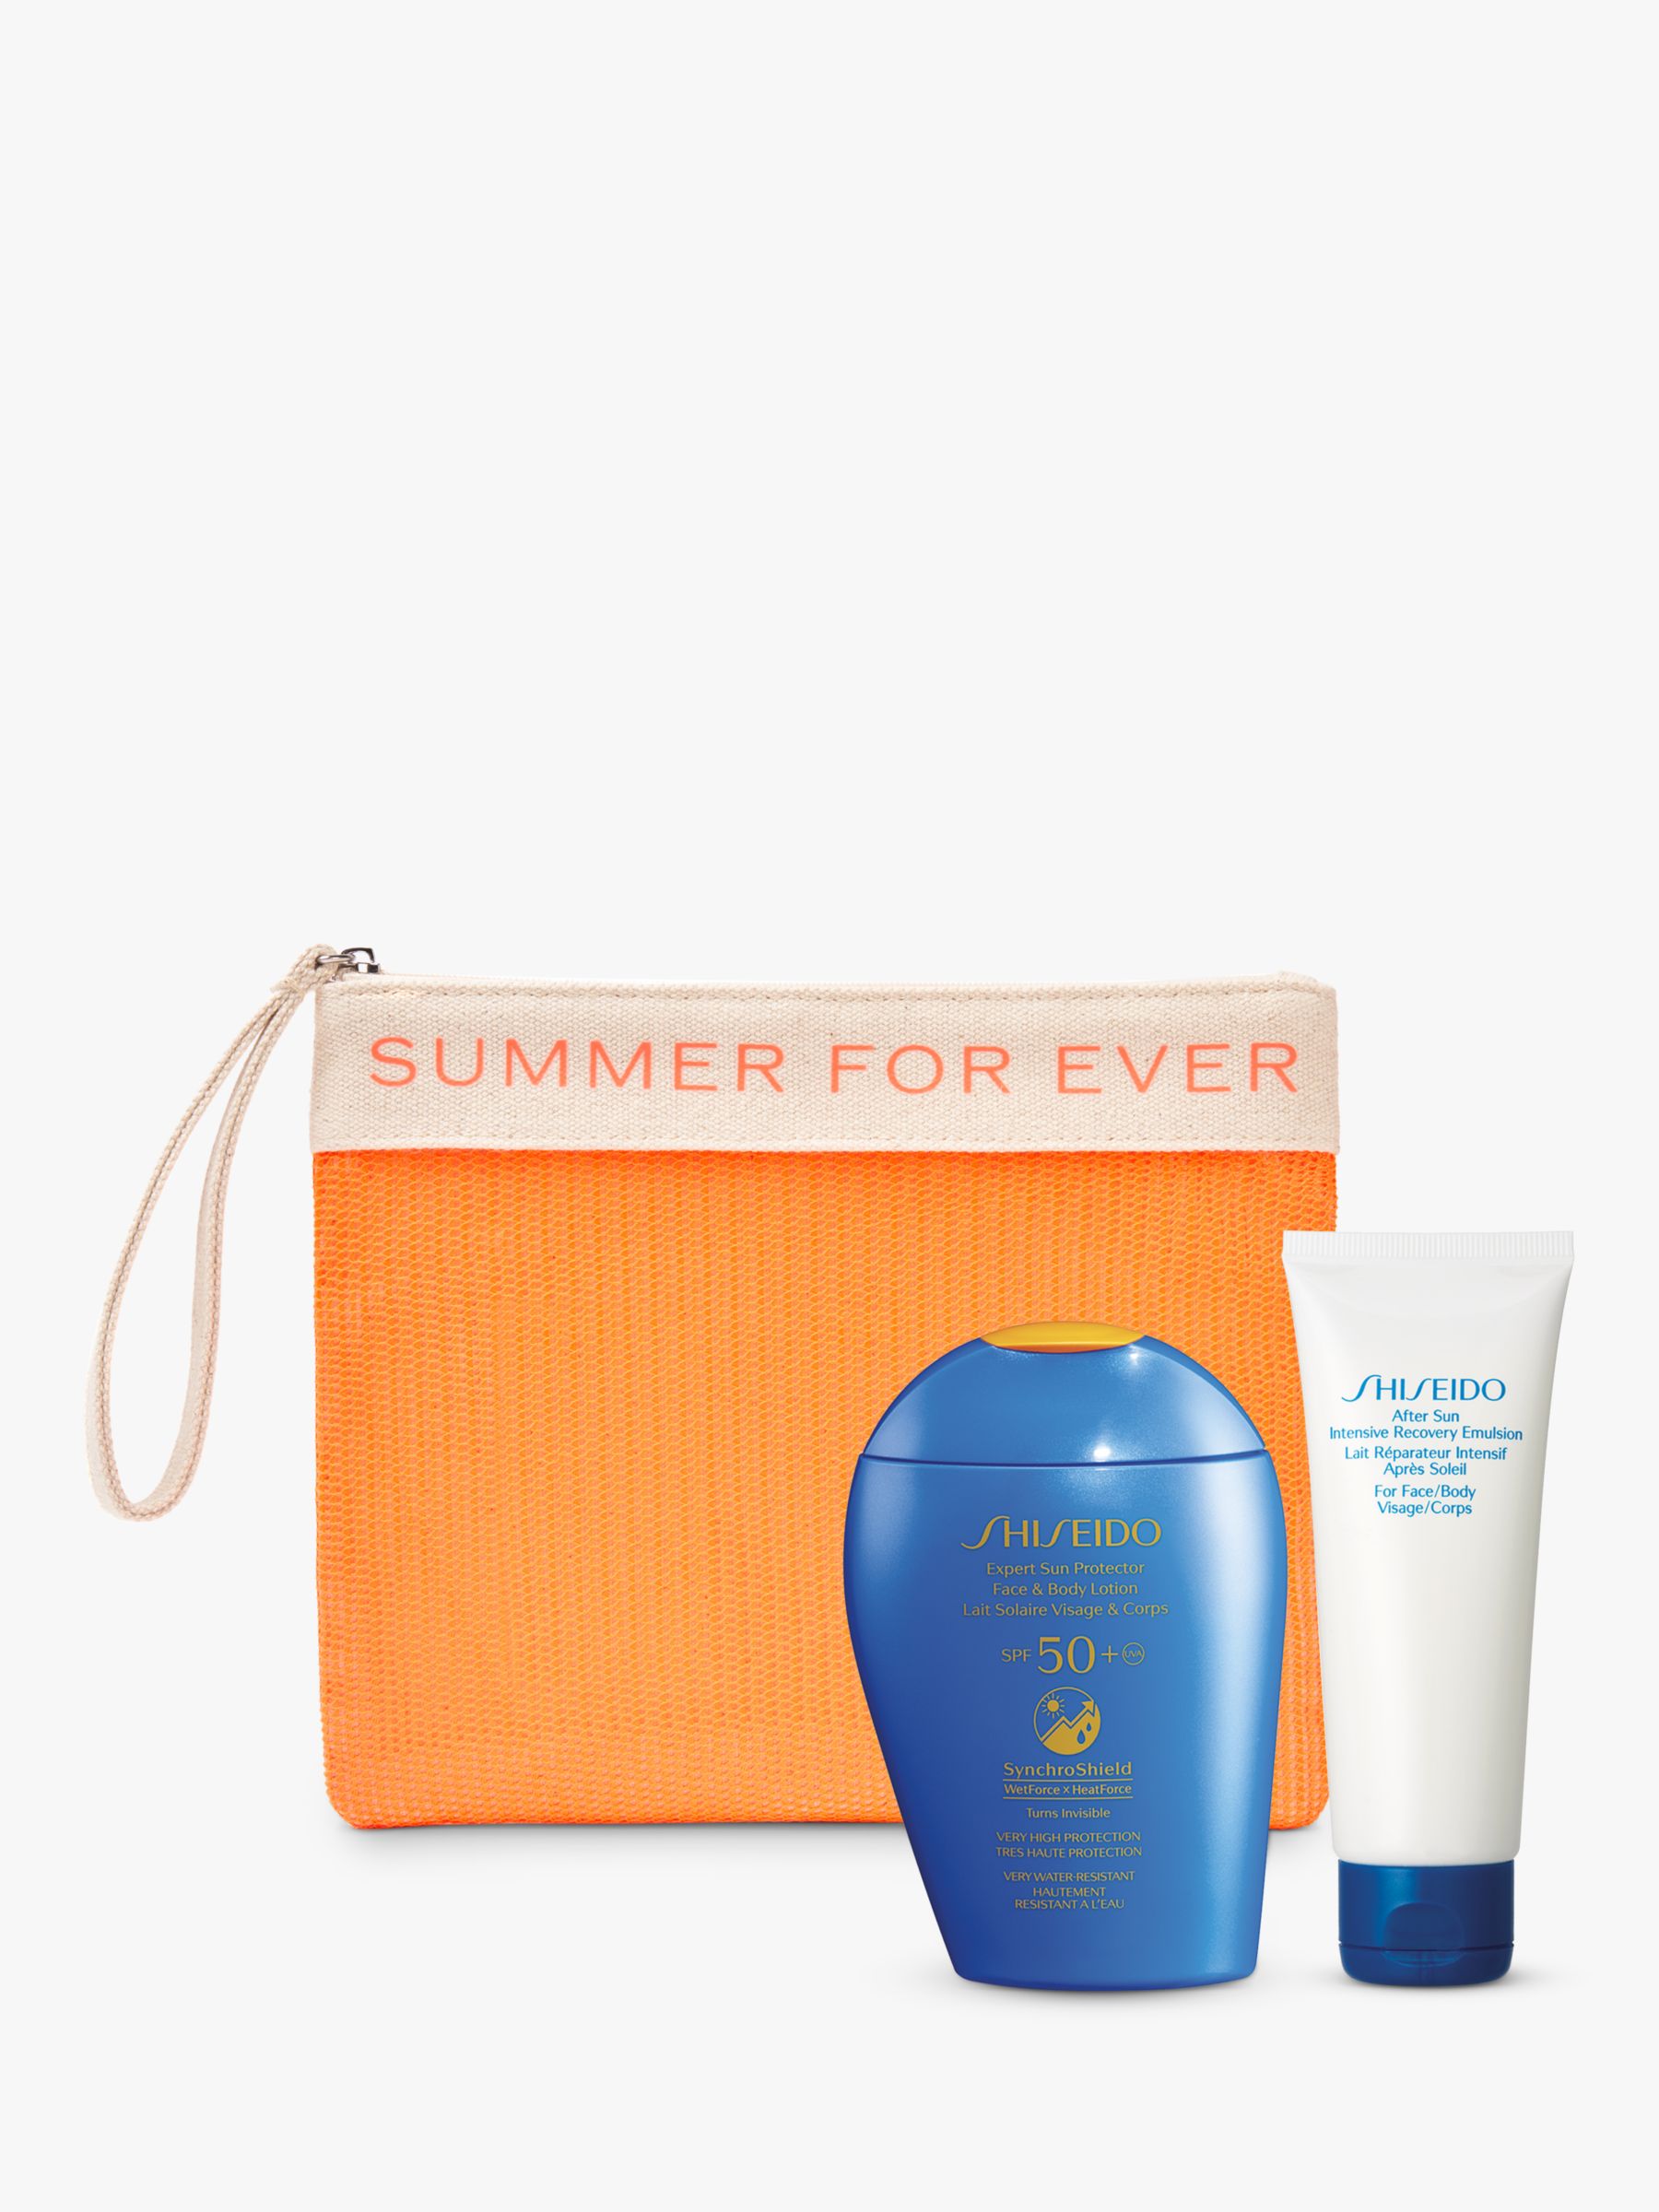 Shiseido Expert Sun Protector SPF 50+ Bodycare Gift Set 1